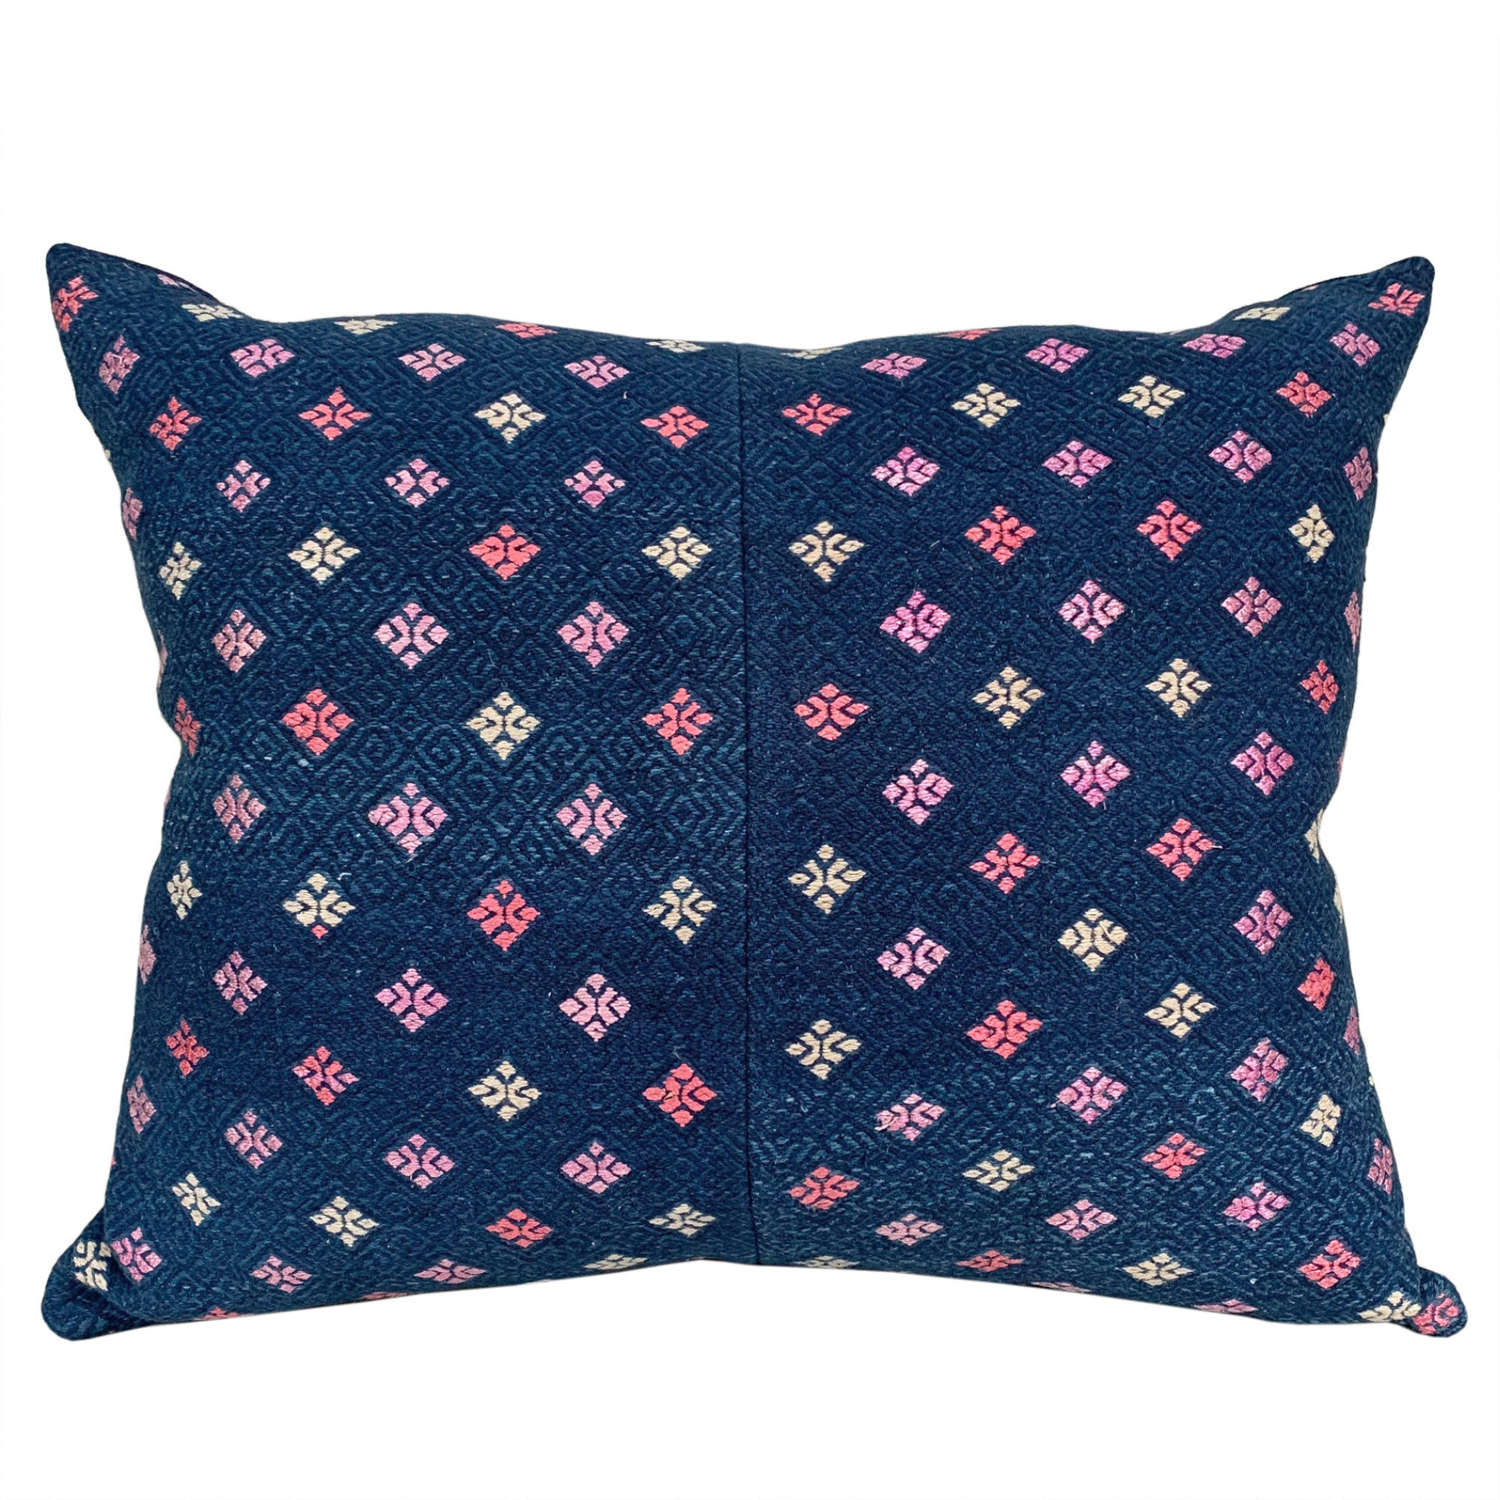 Large Yao cushions, indigo and pink